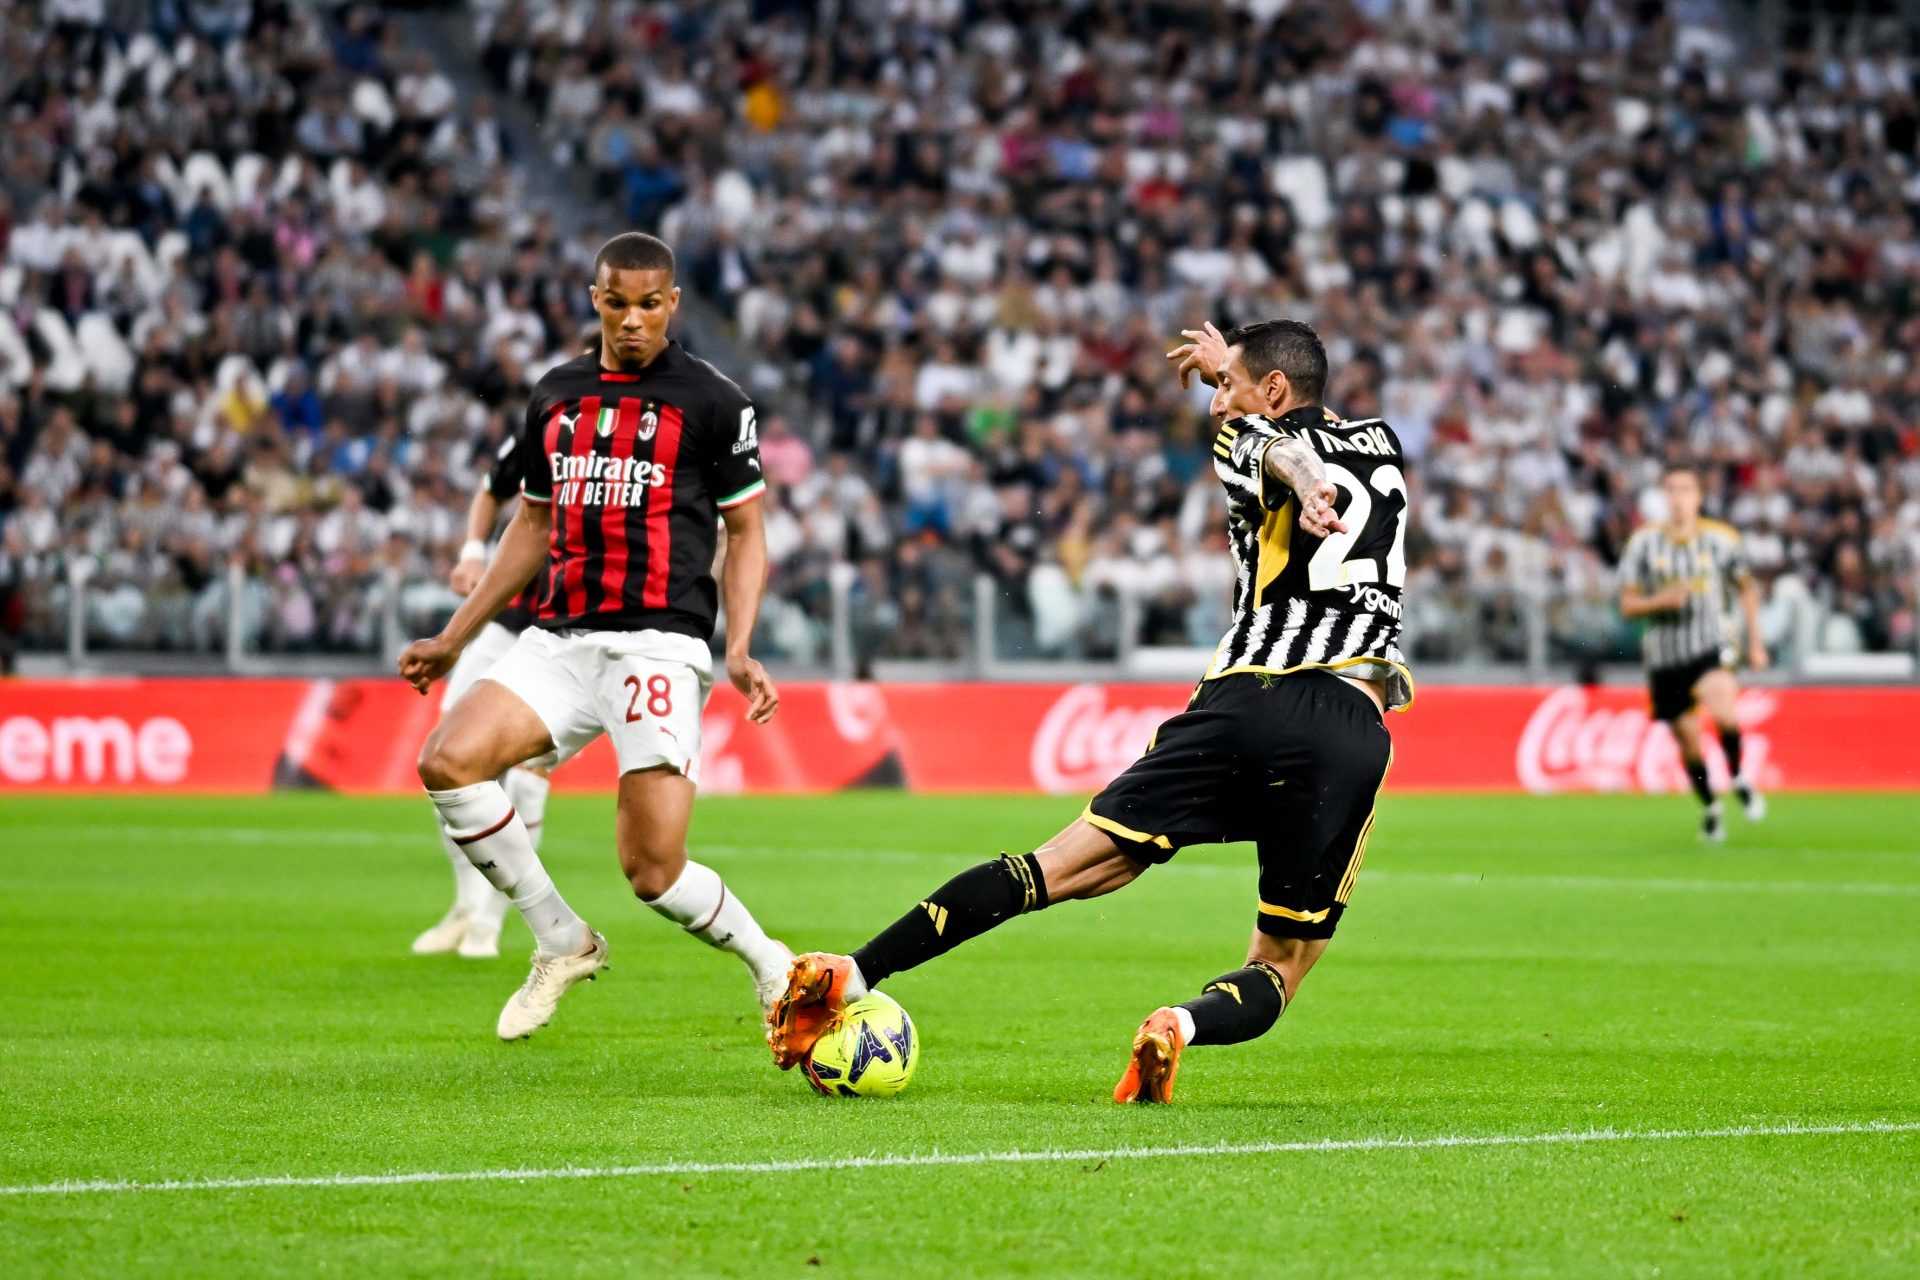 Milan-Juventus (0-1): analisi tattica e considerazioni